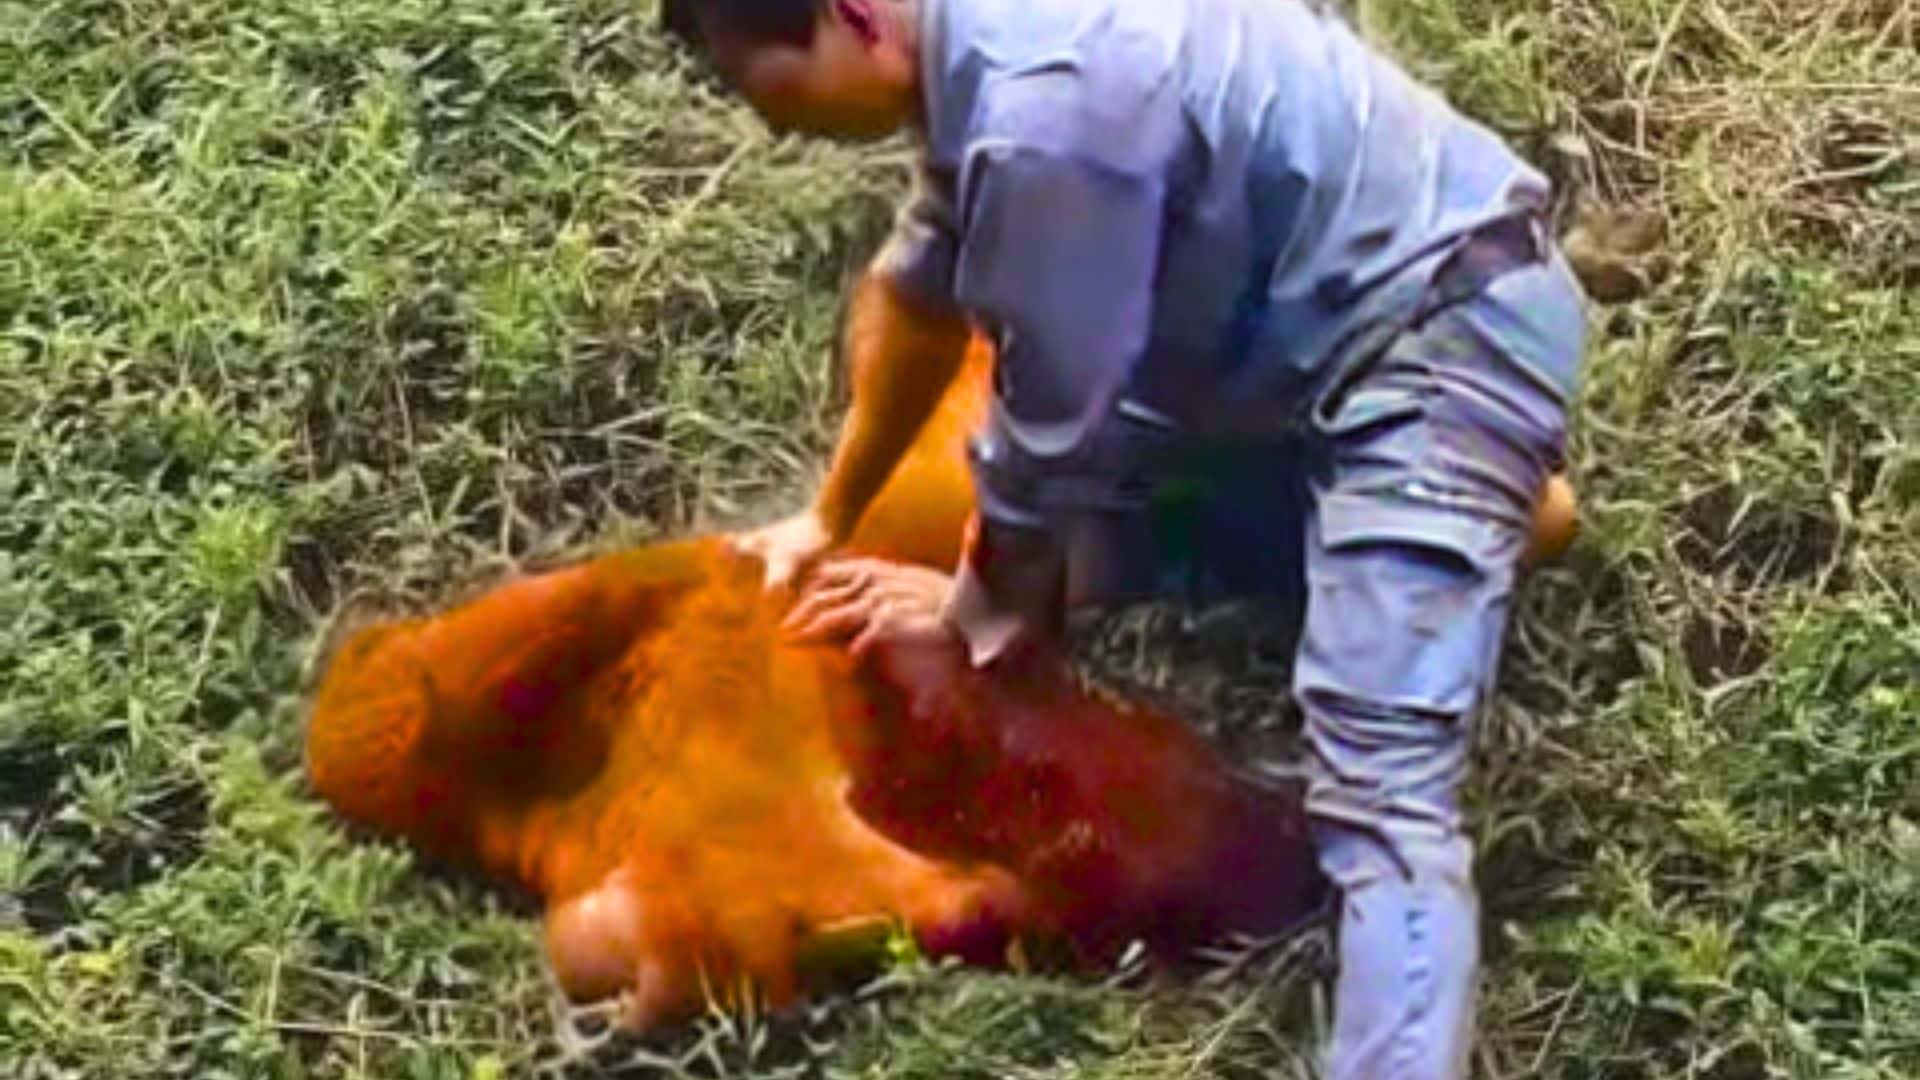 zooworker performs CPR on orangutan